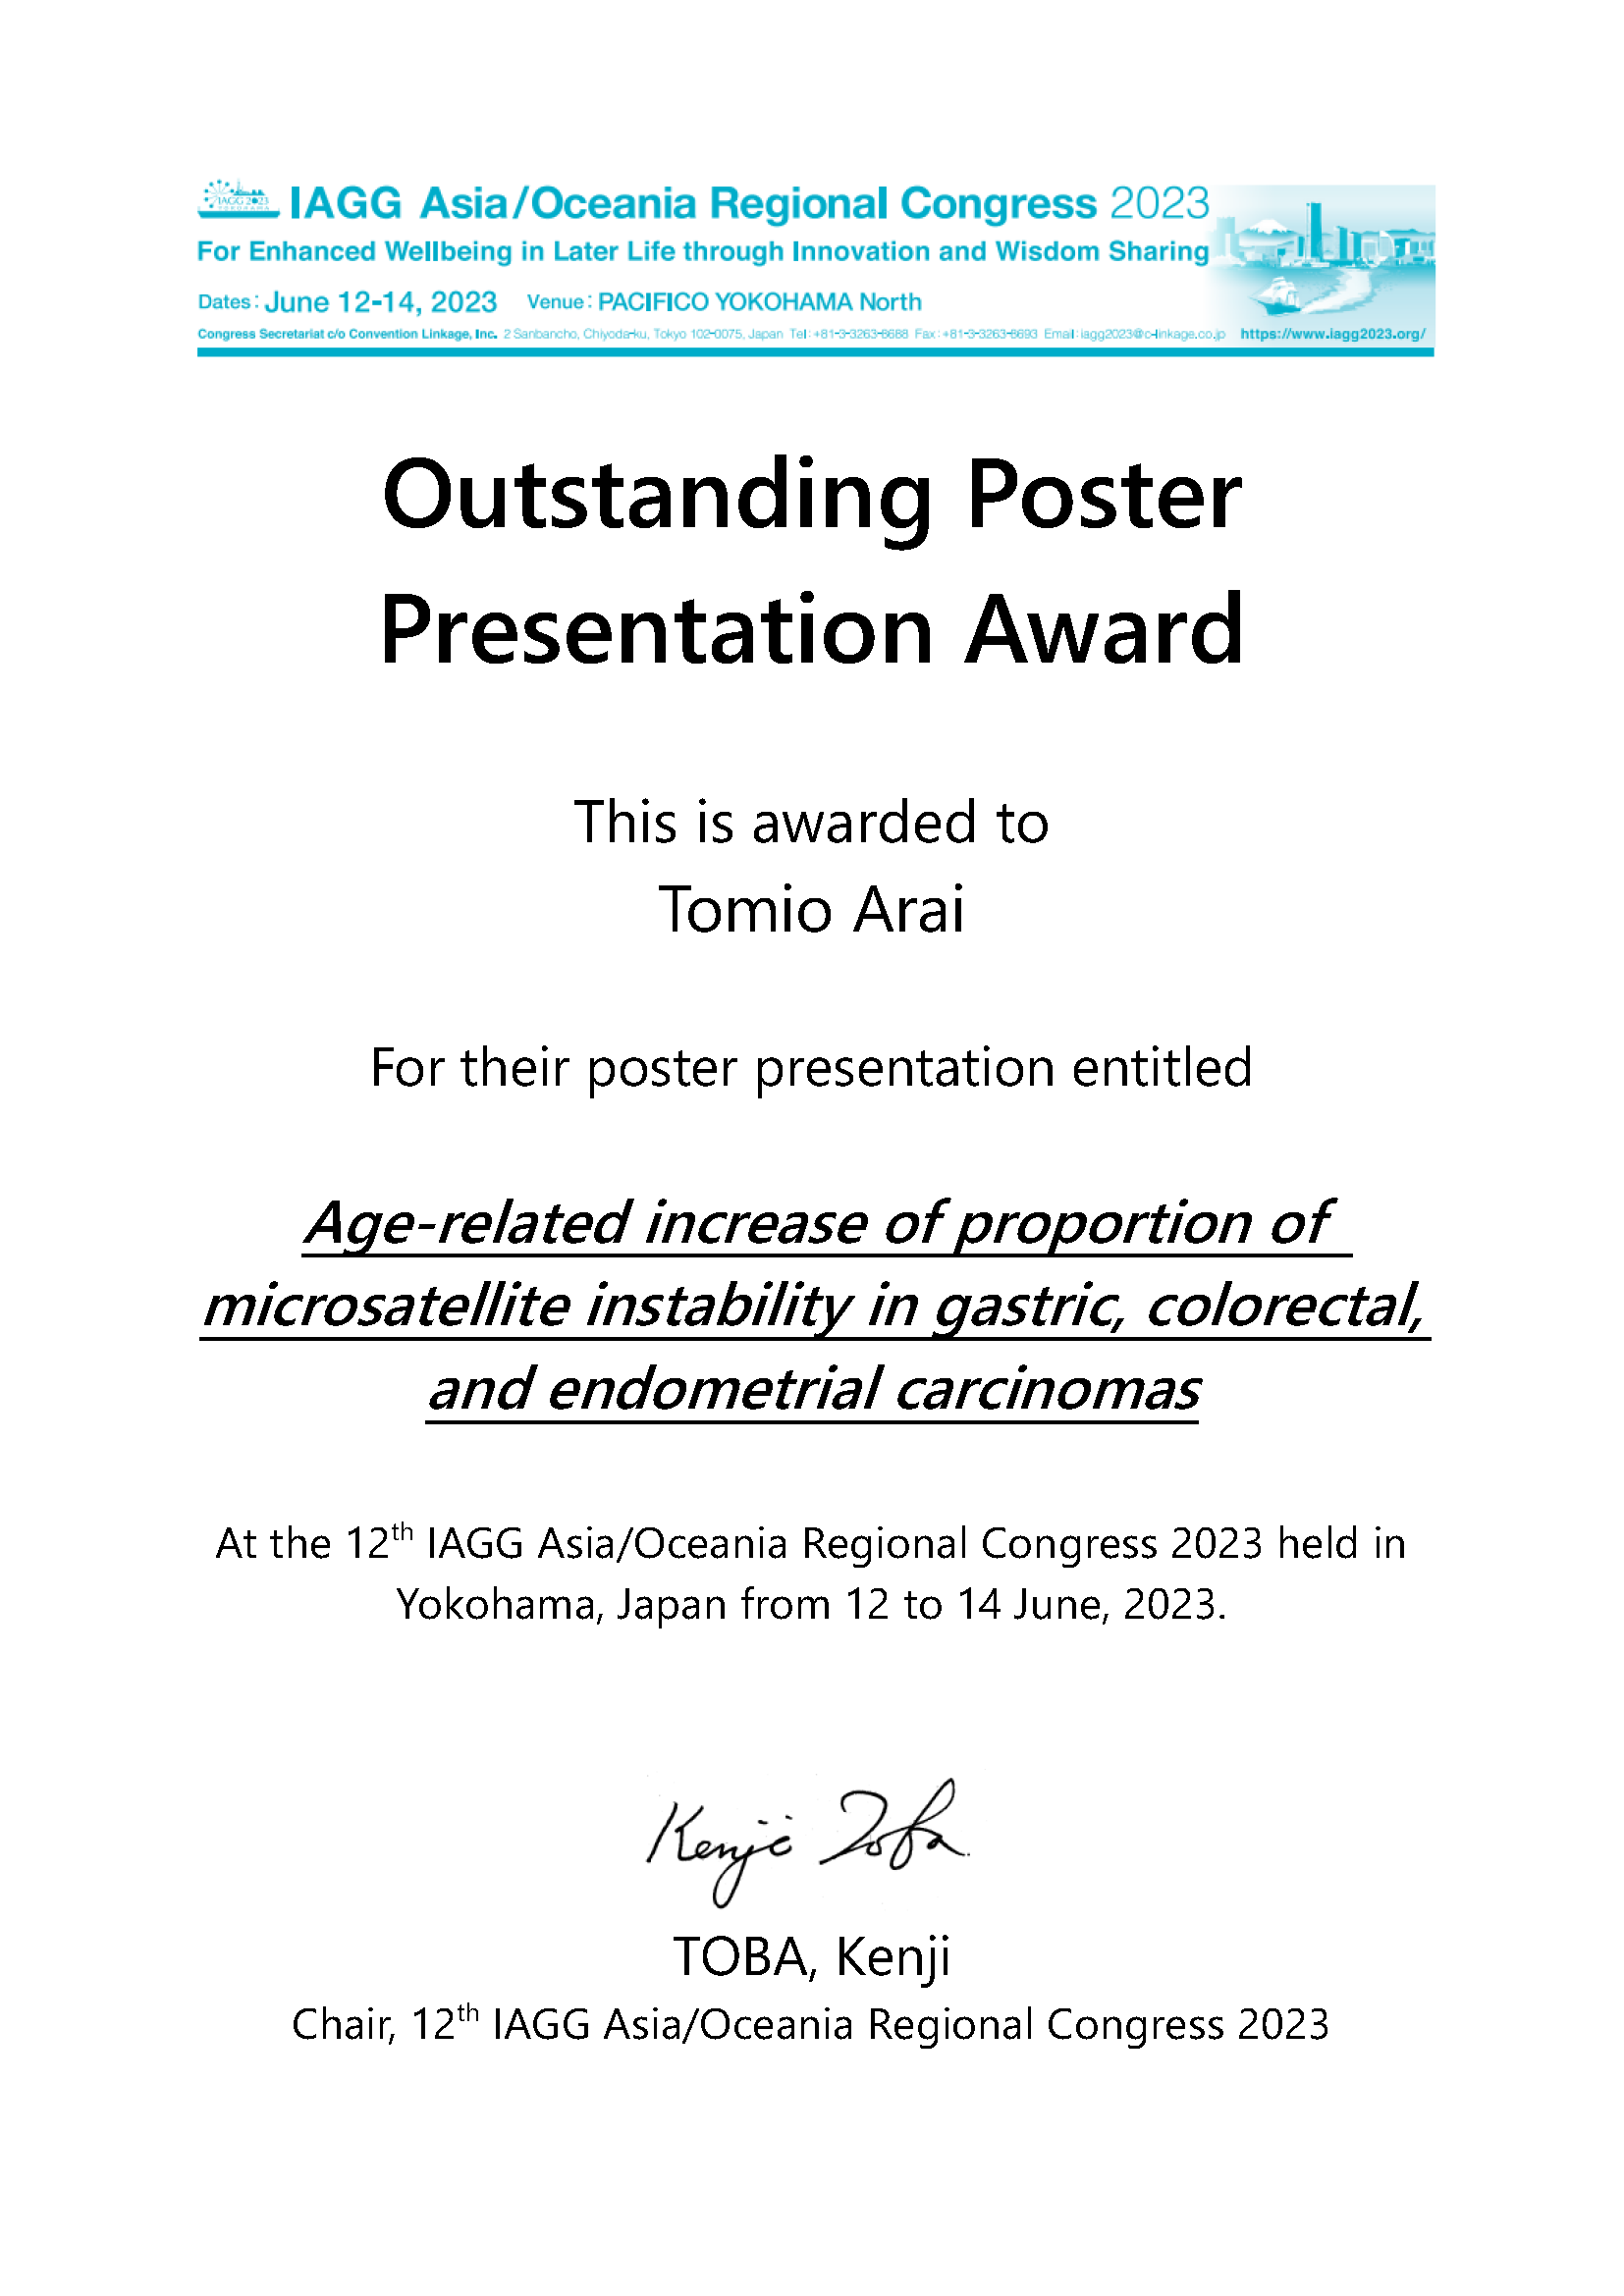 Outstanding Poster Presentation Award_1119_Tomio Arai.png